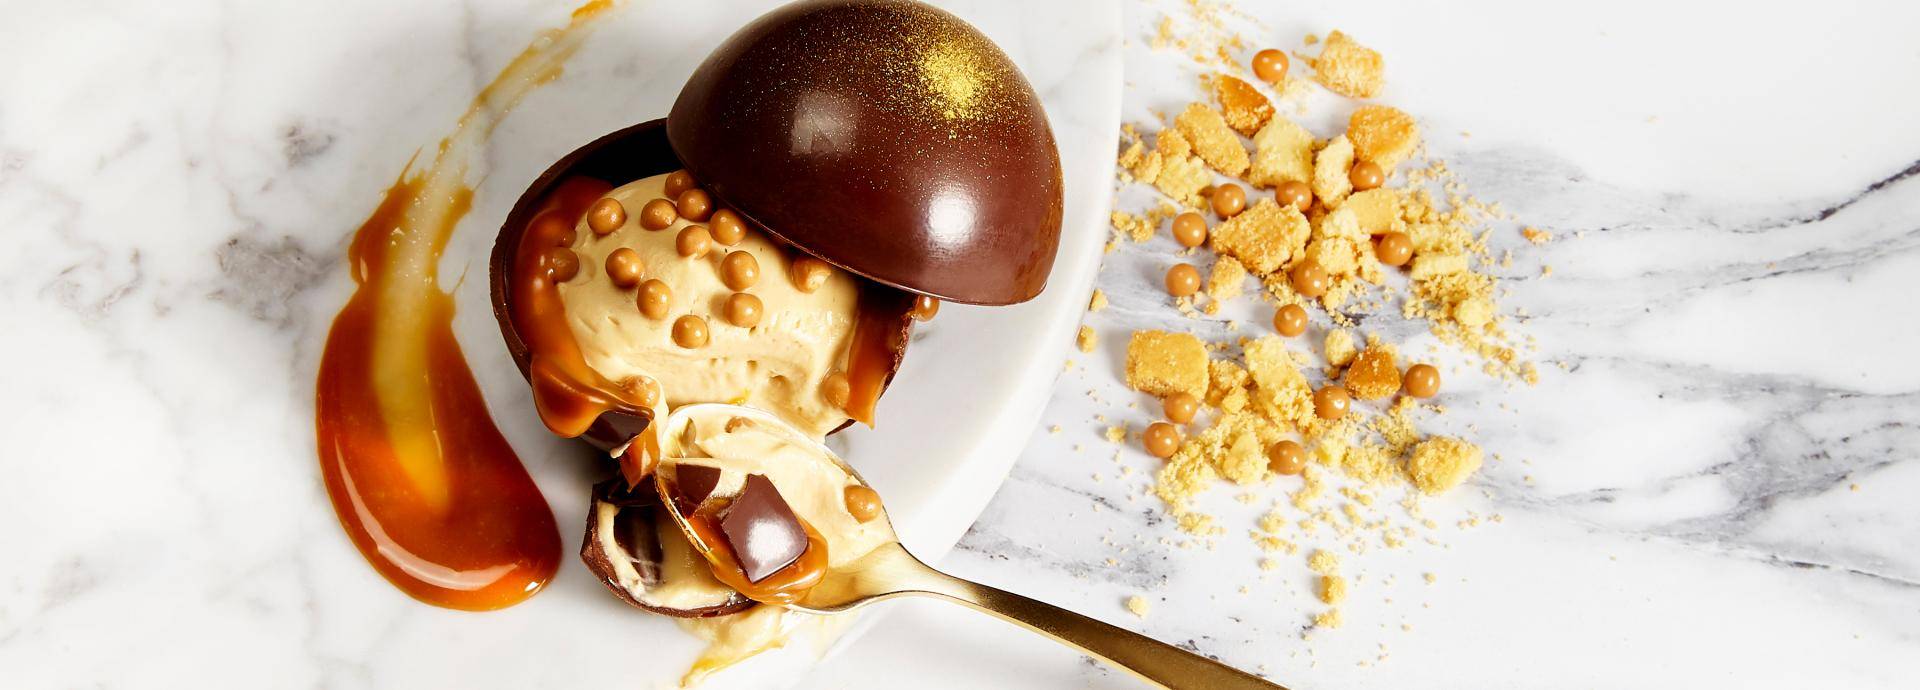 Chocolate Dome with Gold Ganache & Crispy Caramel slider